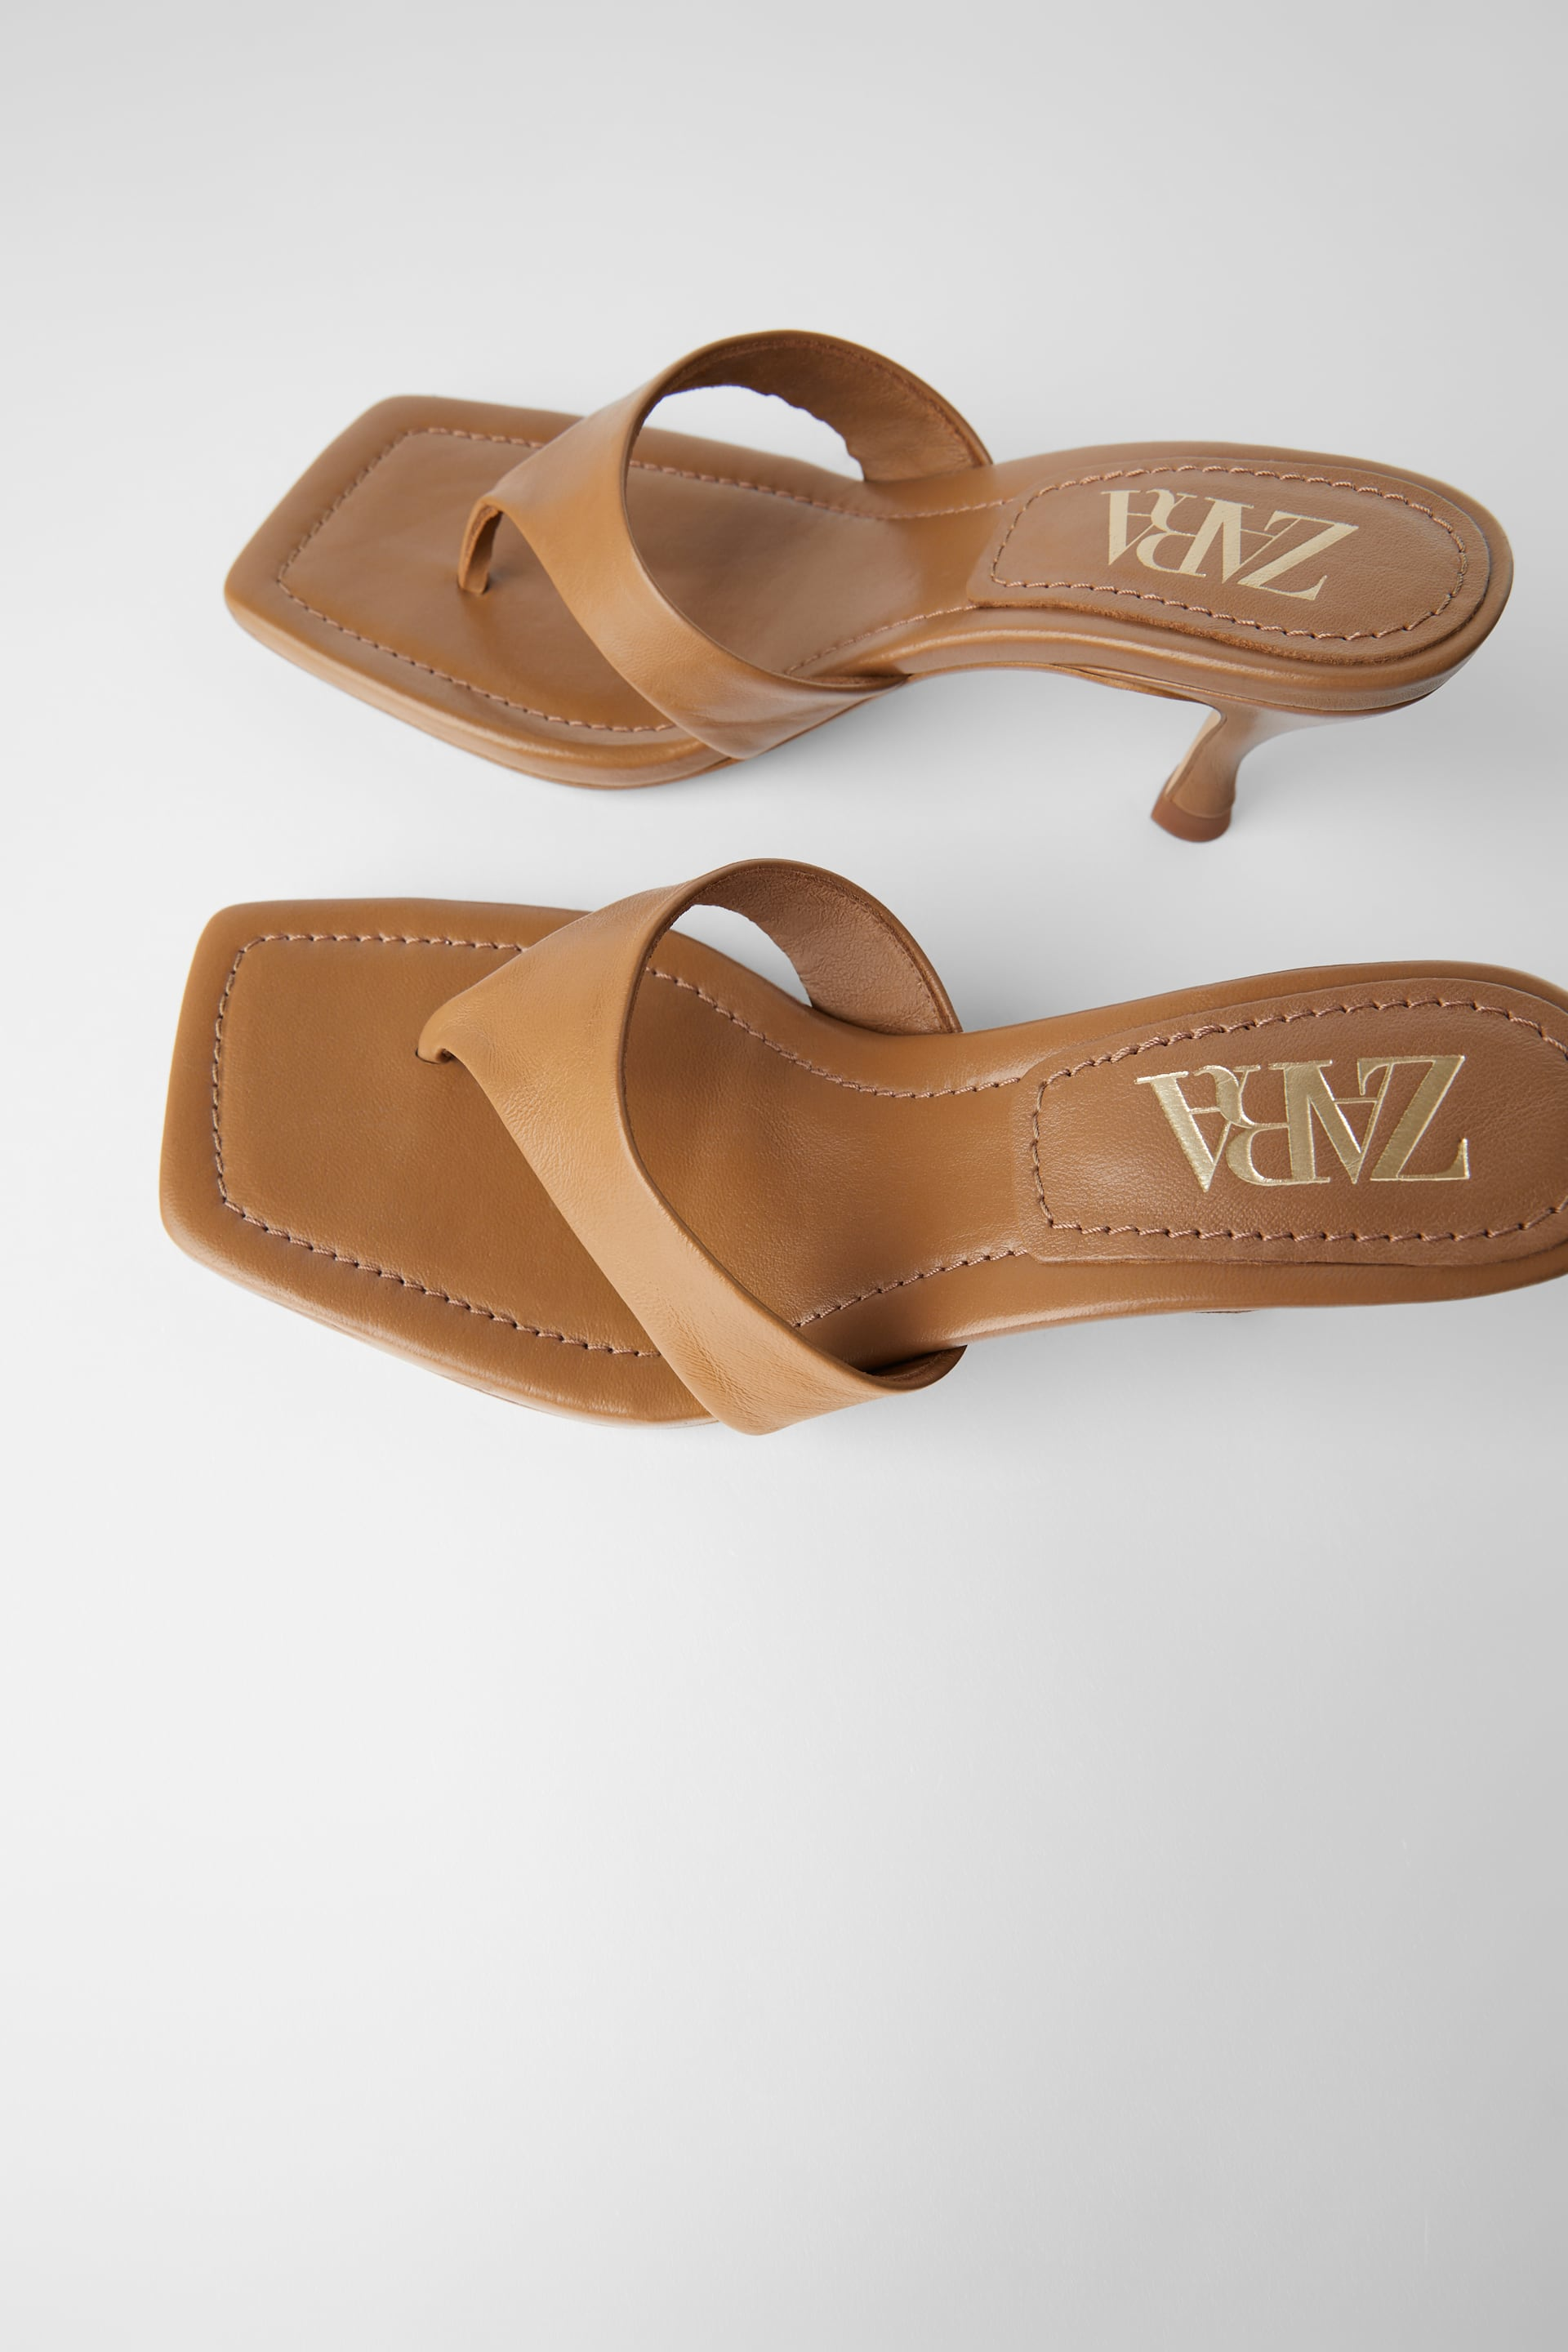 zara square heels